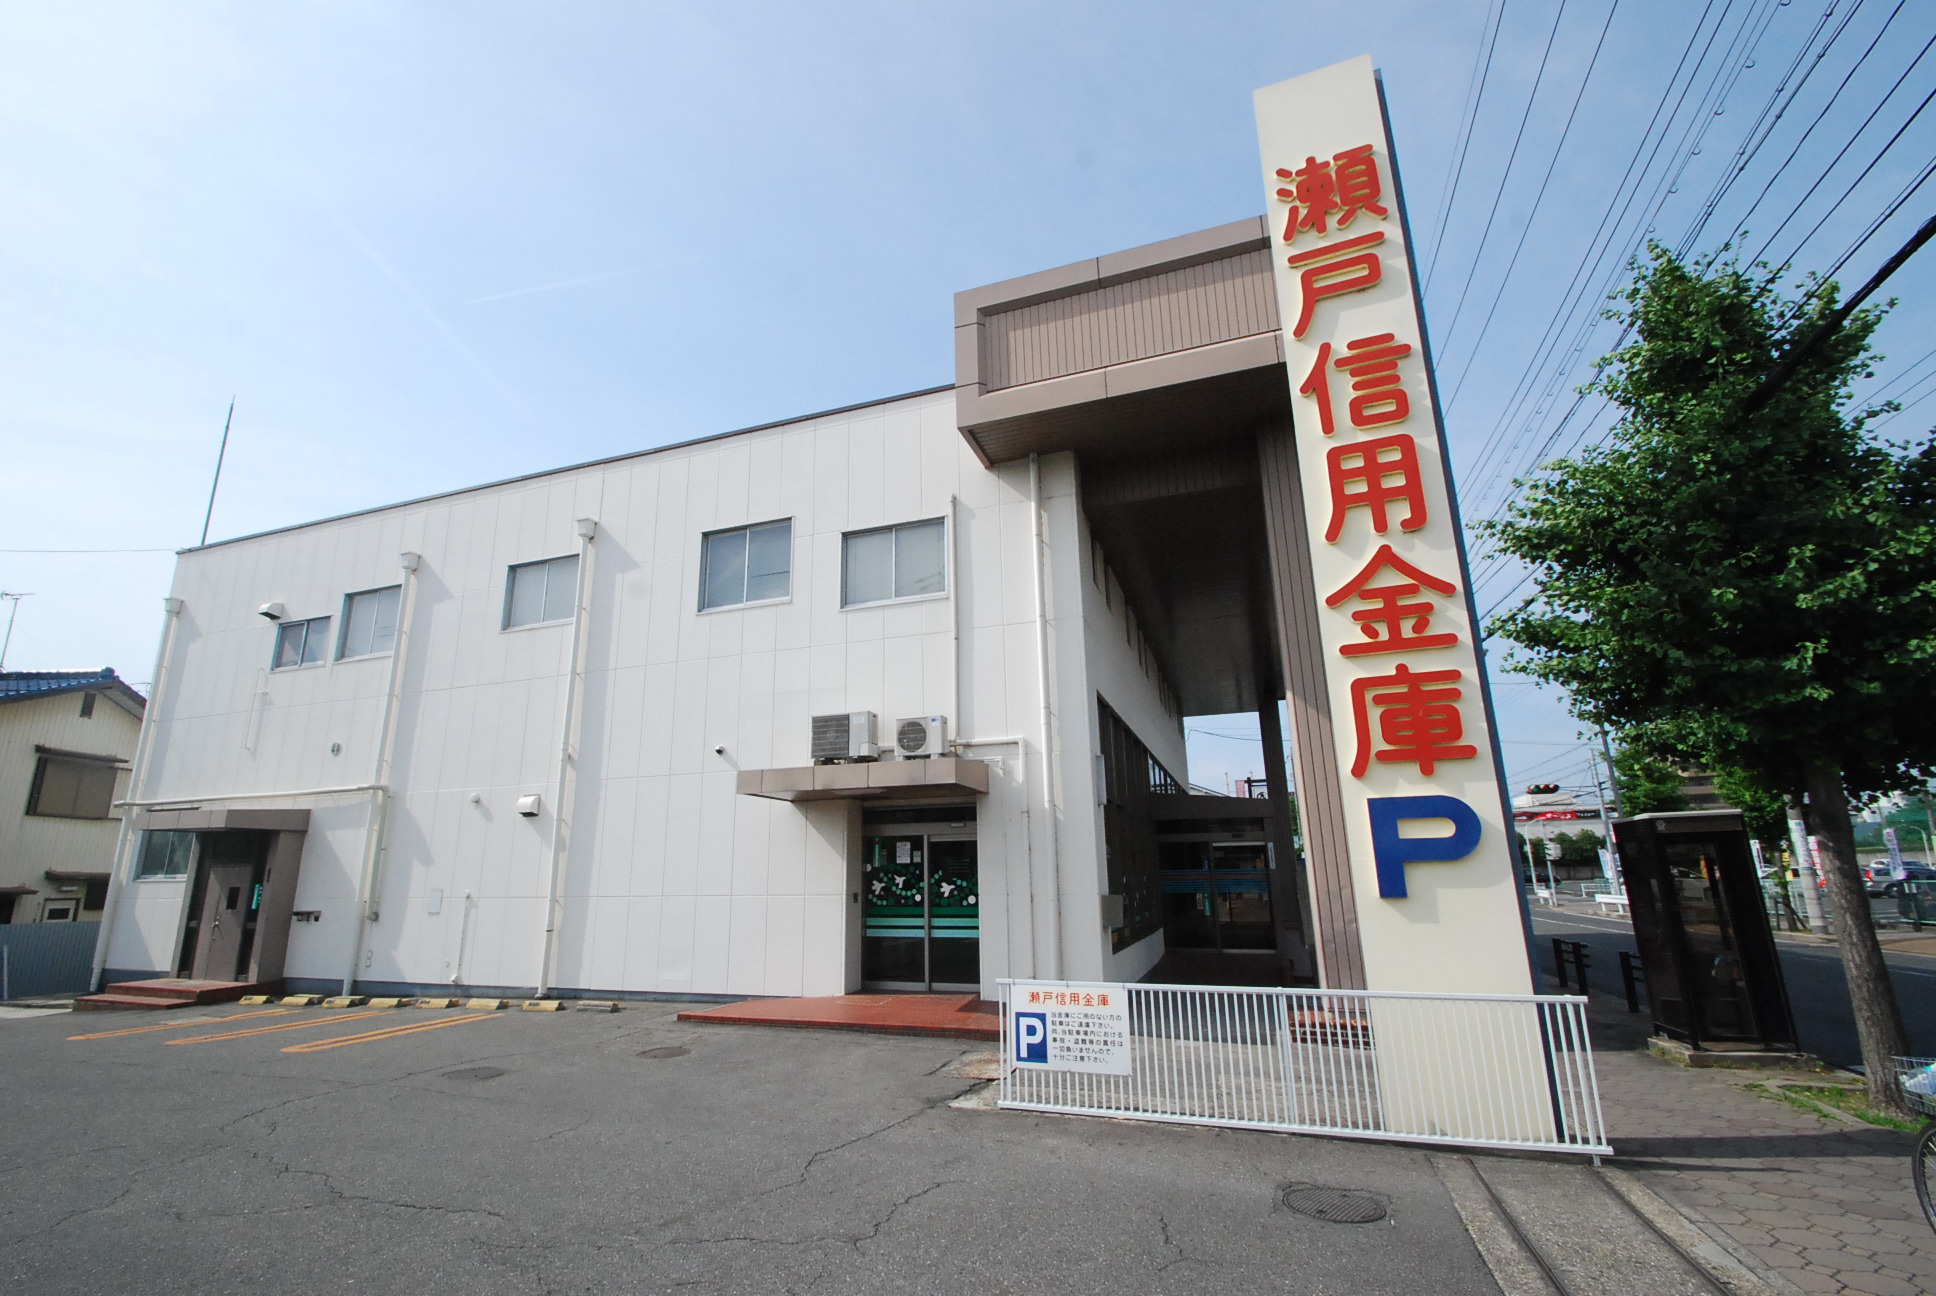 Bank. Seto credit union Shiken'ya 1160m to the branch (Bank)